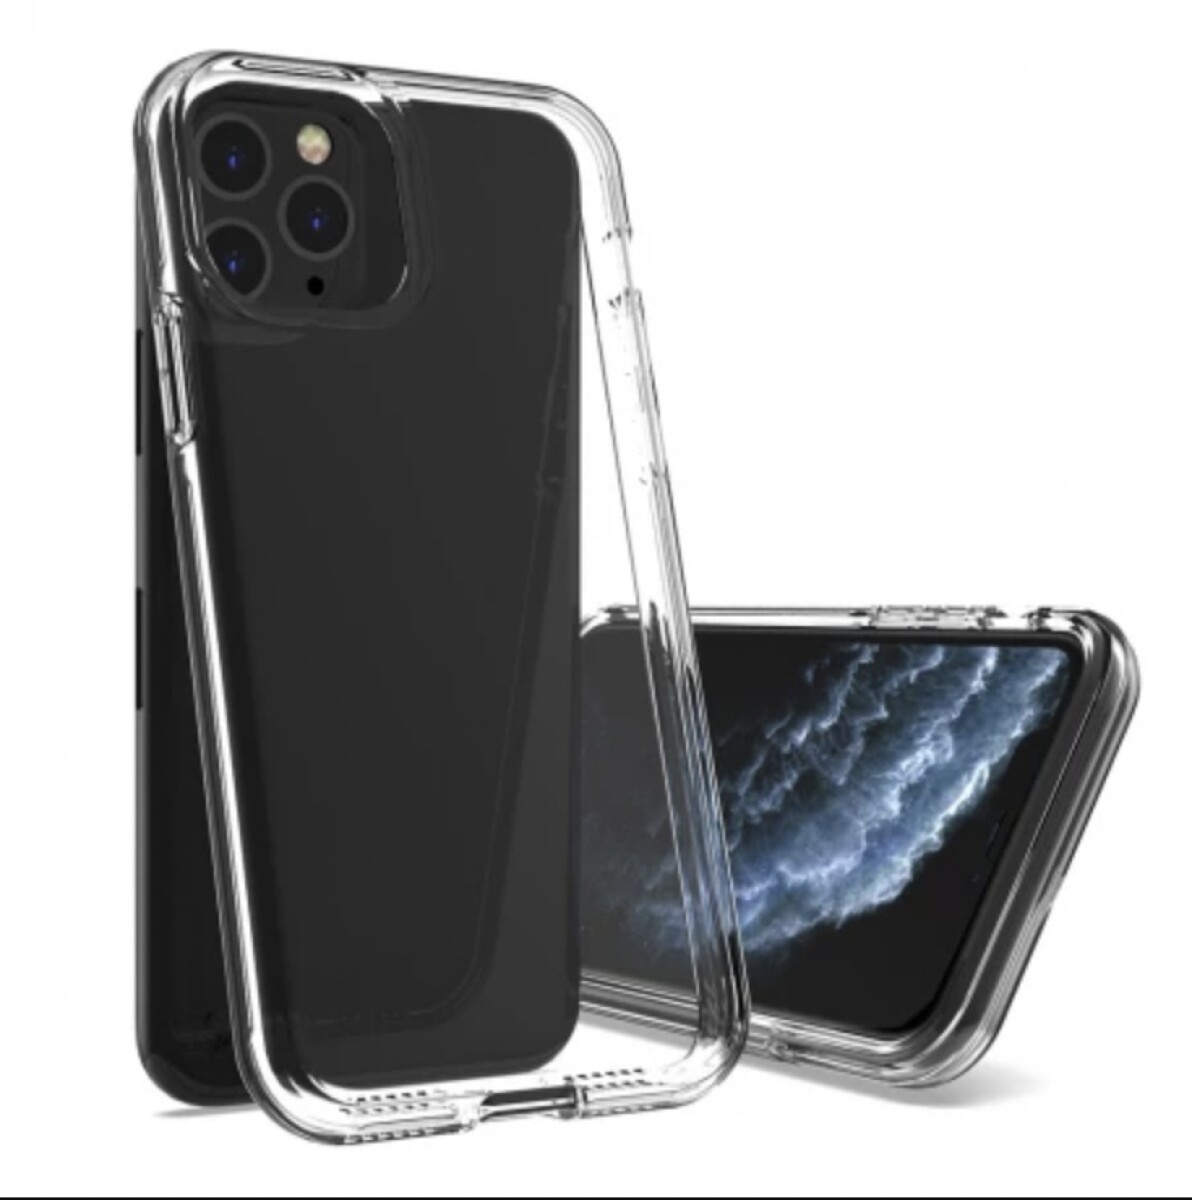 Armor transparente iphone 12 mini - Transparente 